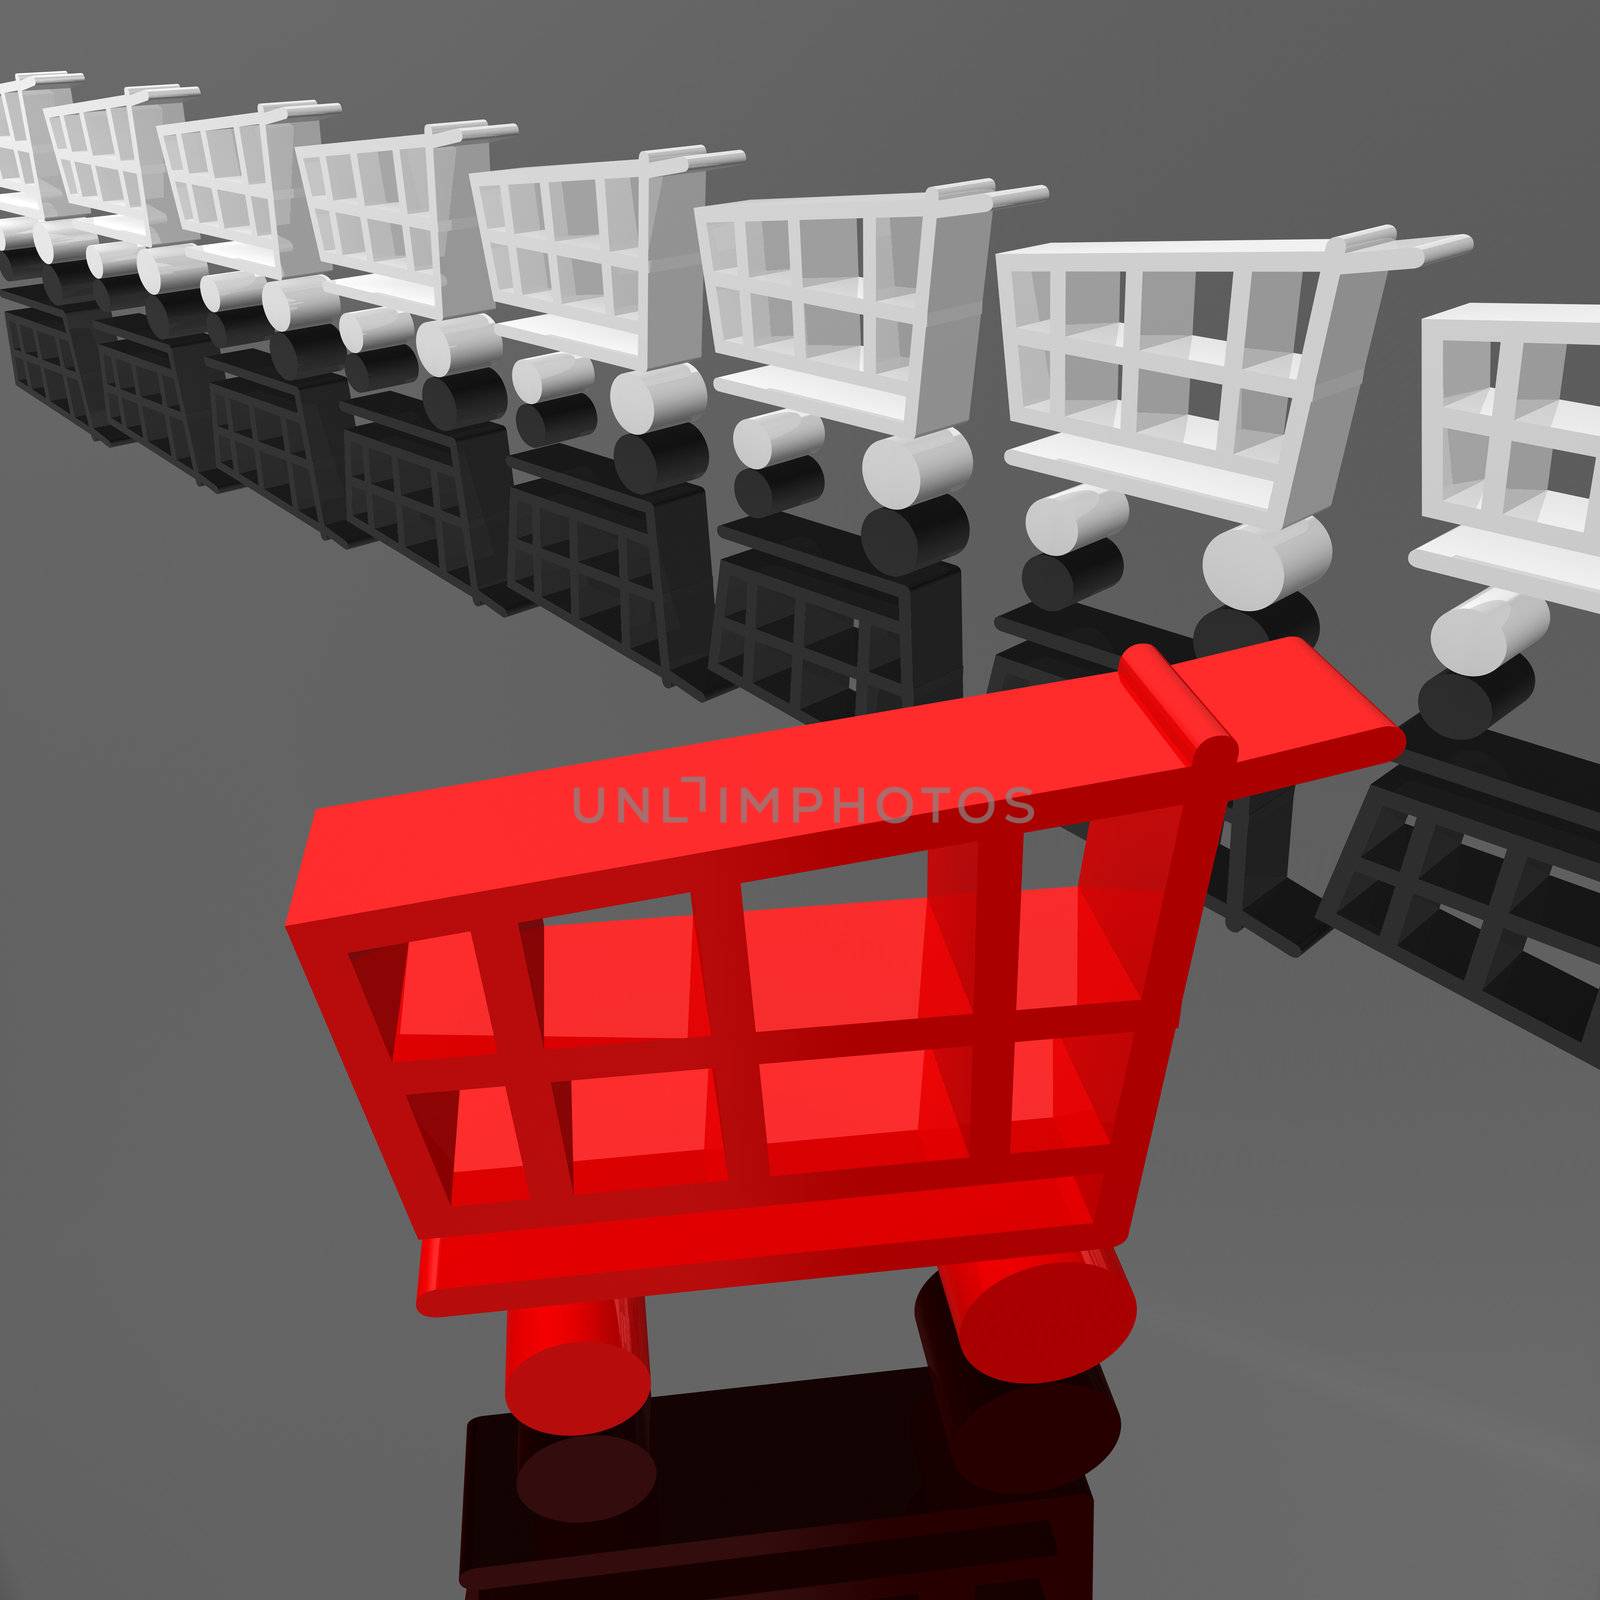 3d image of shopping cart